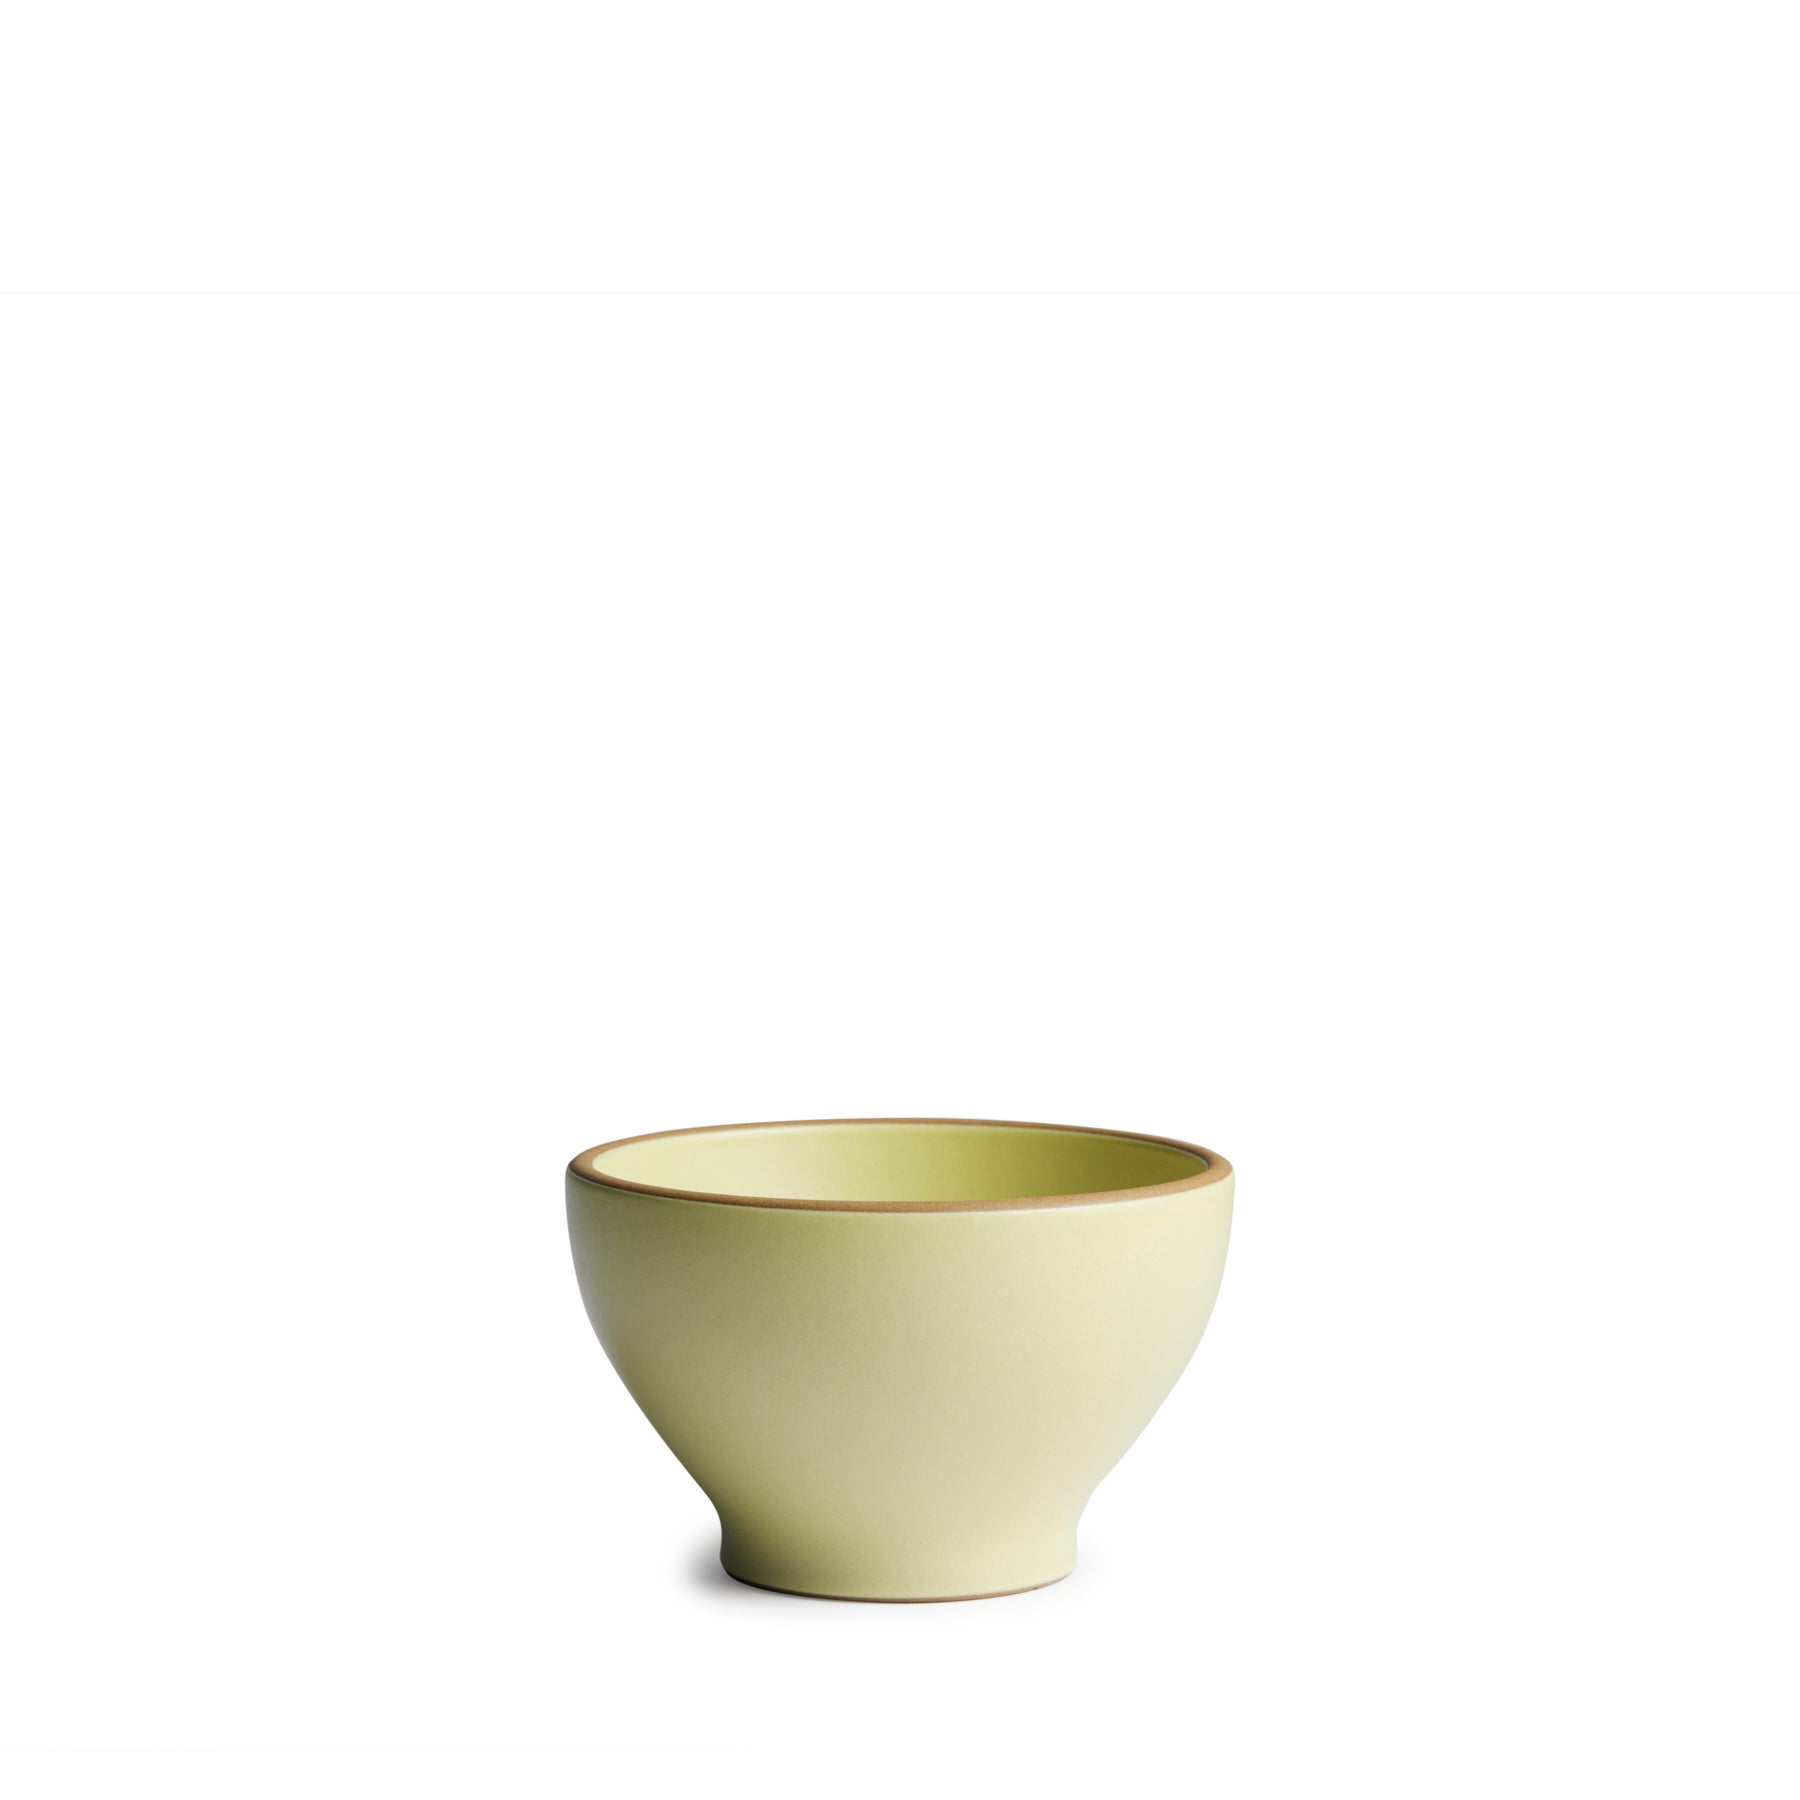 Café Bowl in Lemon Rind Zoom Image 1